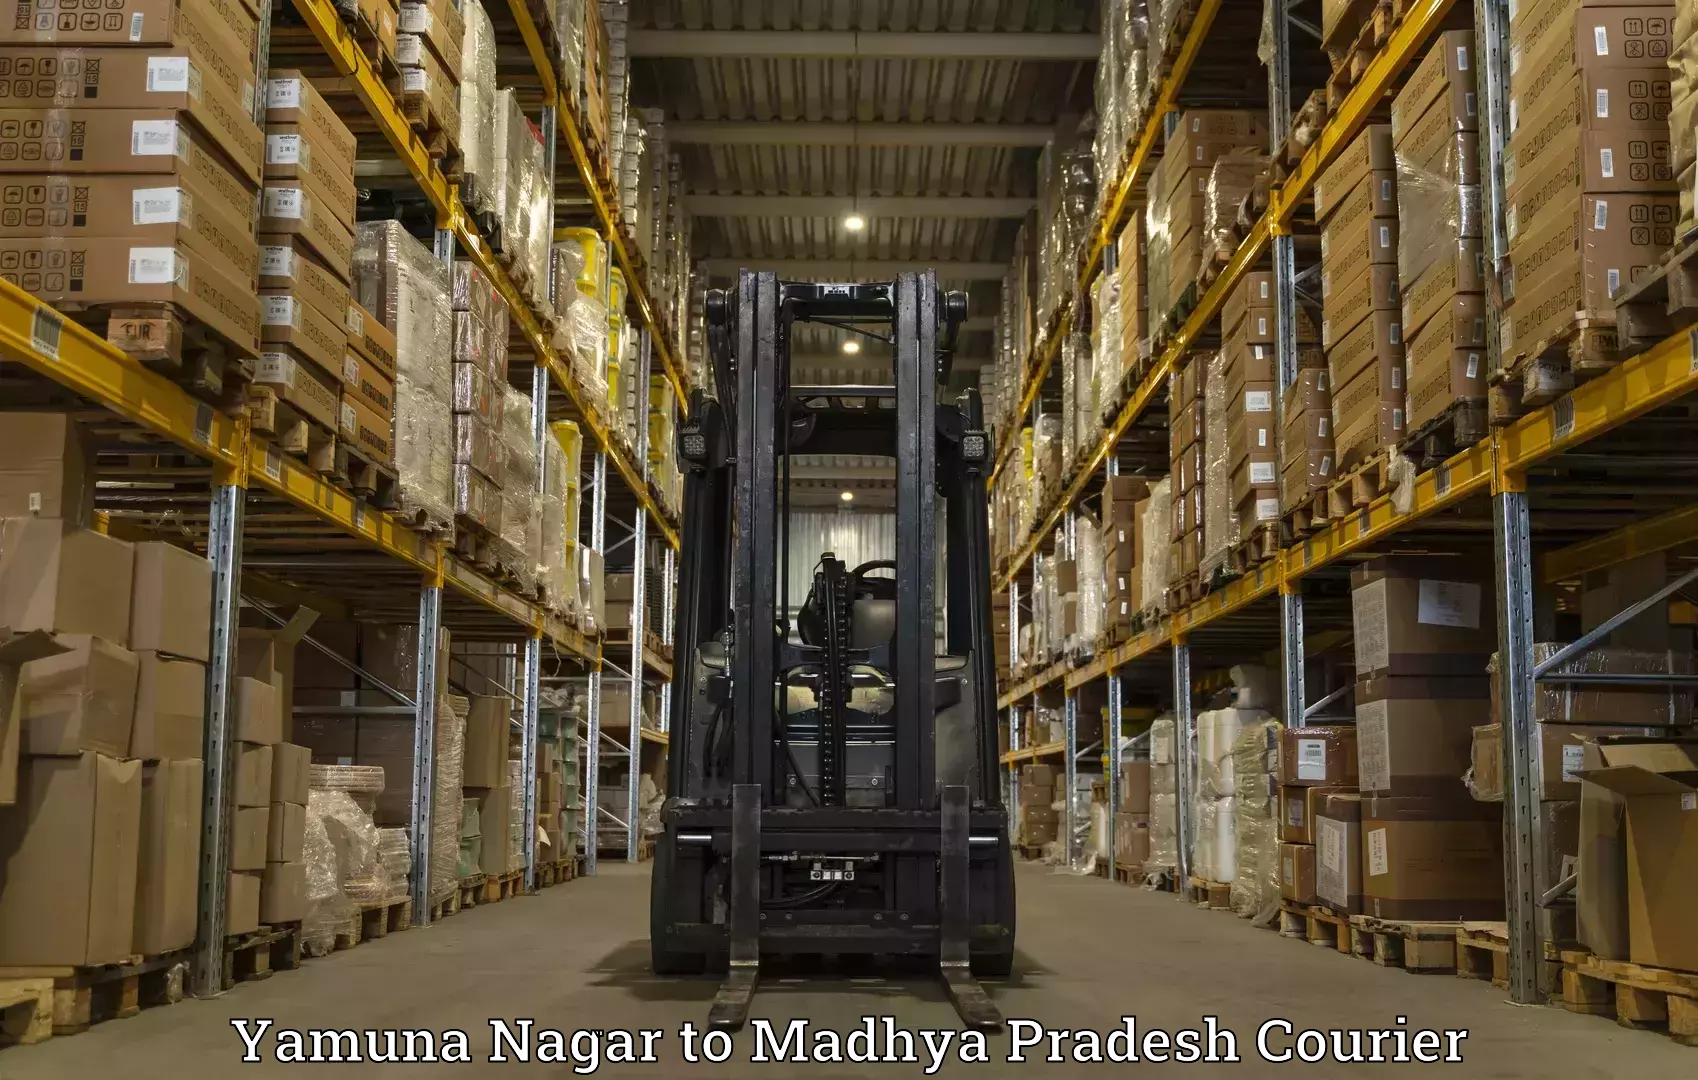 Global courier networks Yamuna Nagar to Bhind